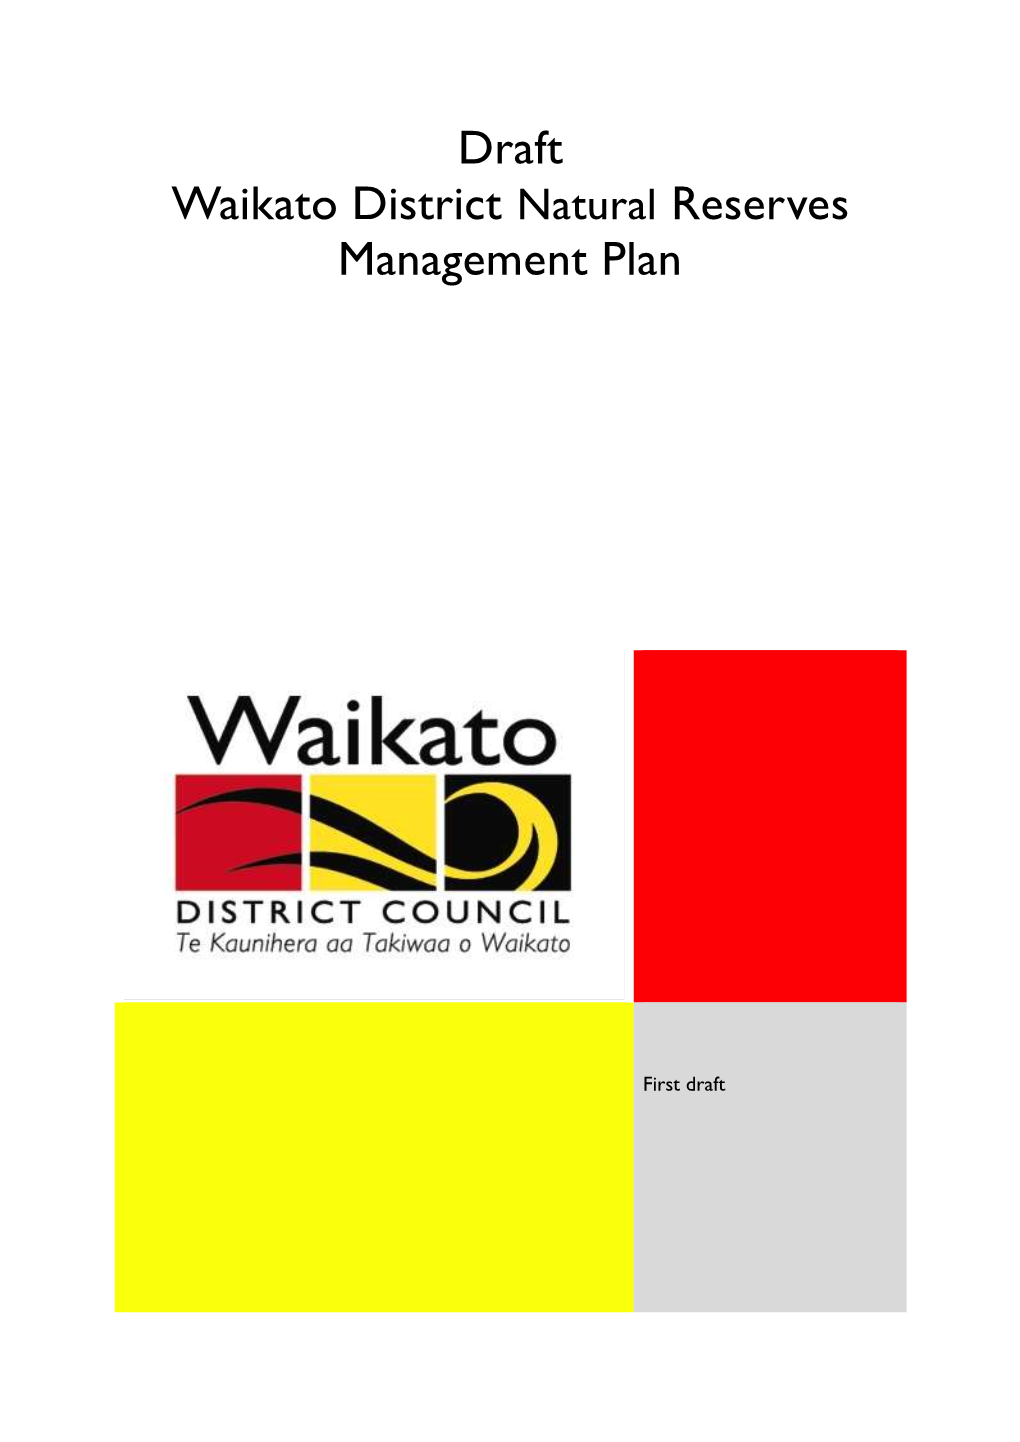 Draft Waikato District Natural Reserves Management Plan